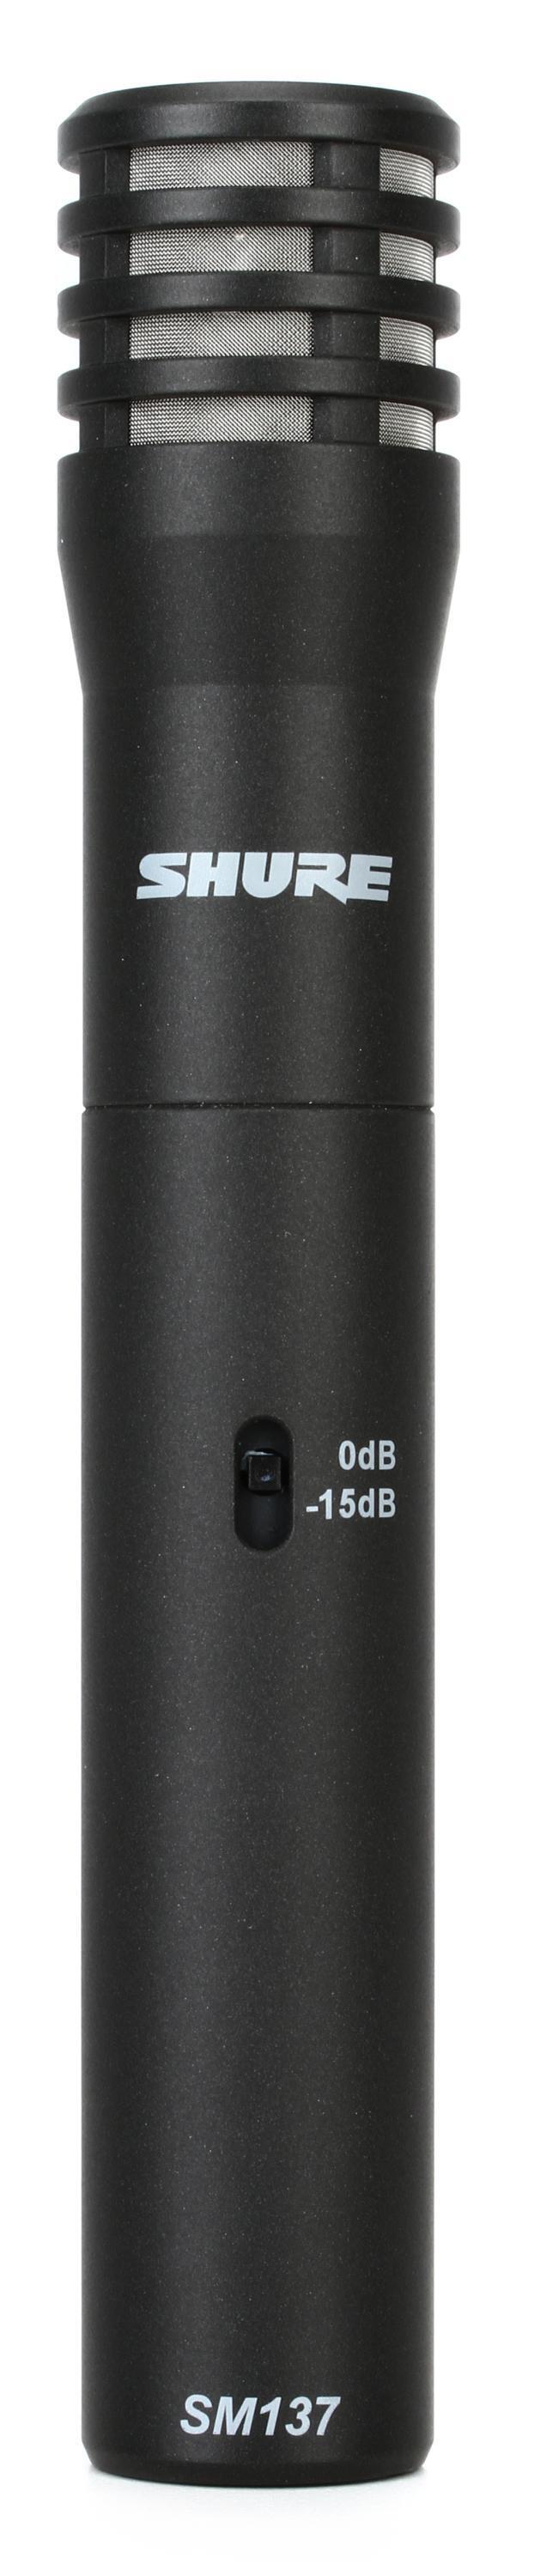 Bundled Item: Shure SM137 Small-diaphragm Condenser Microphone